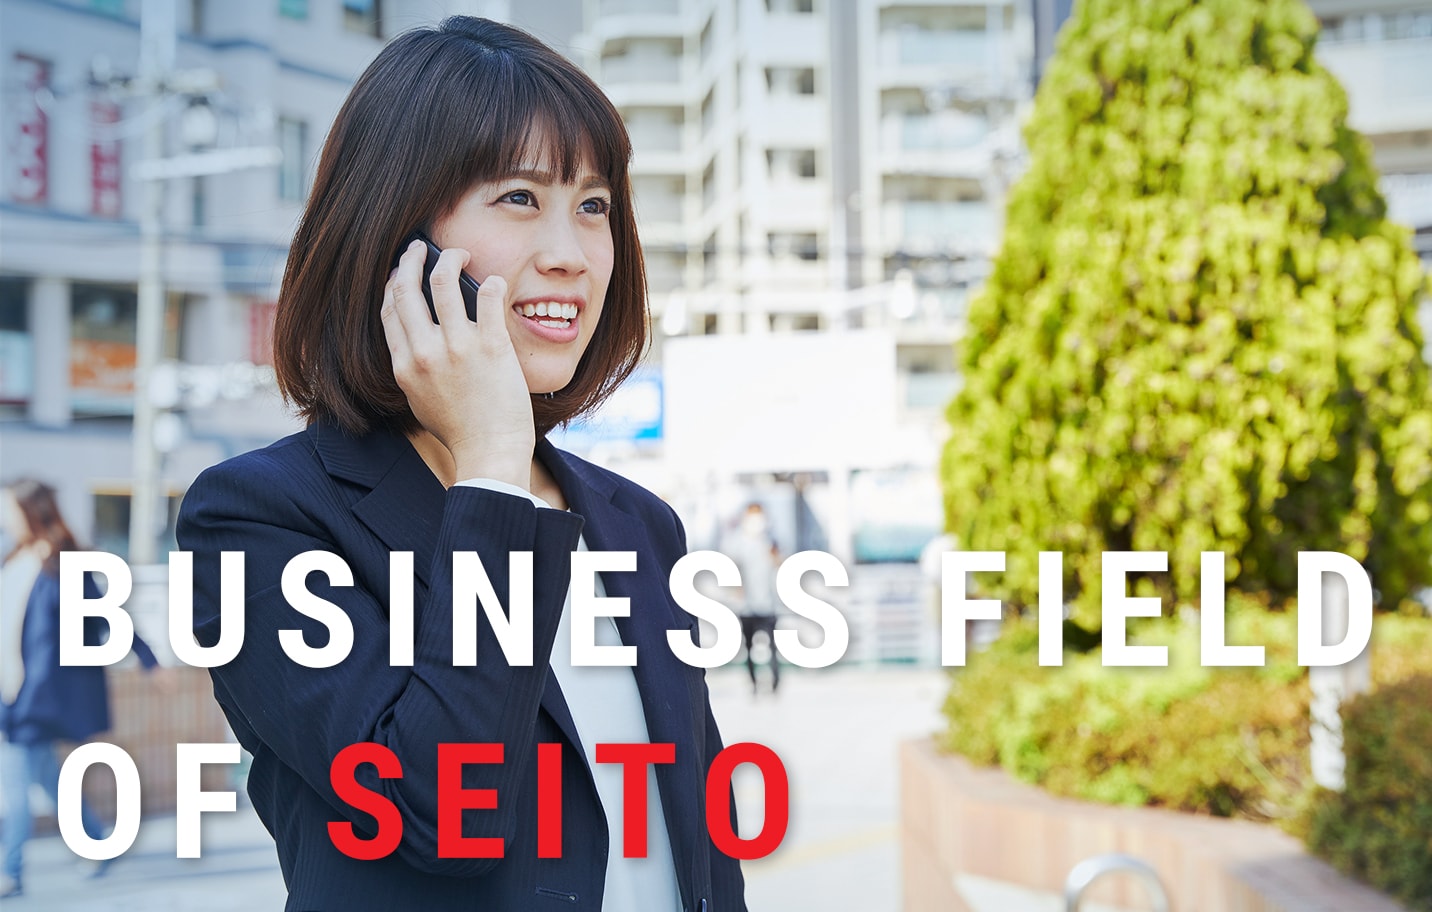 BUSINESS FIELD OF SEITO